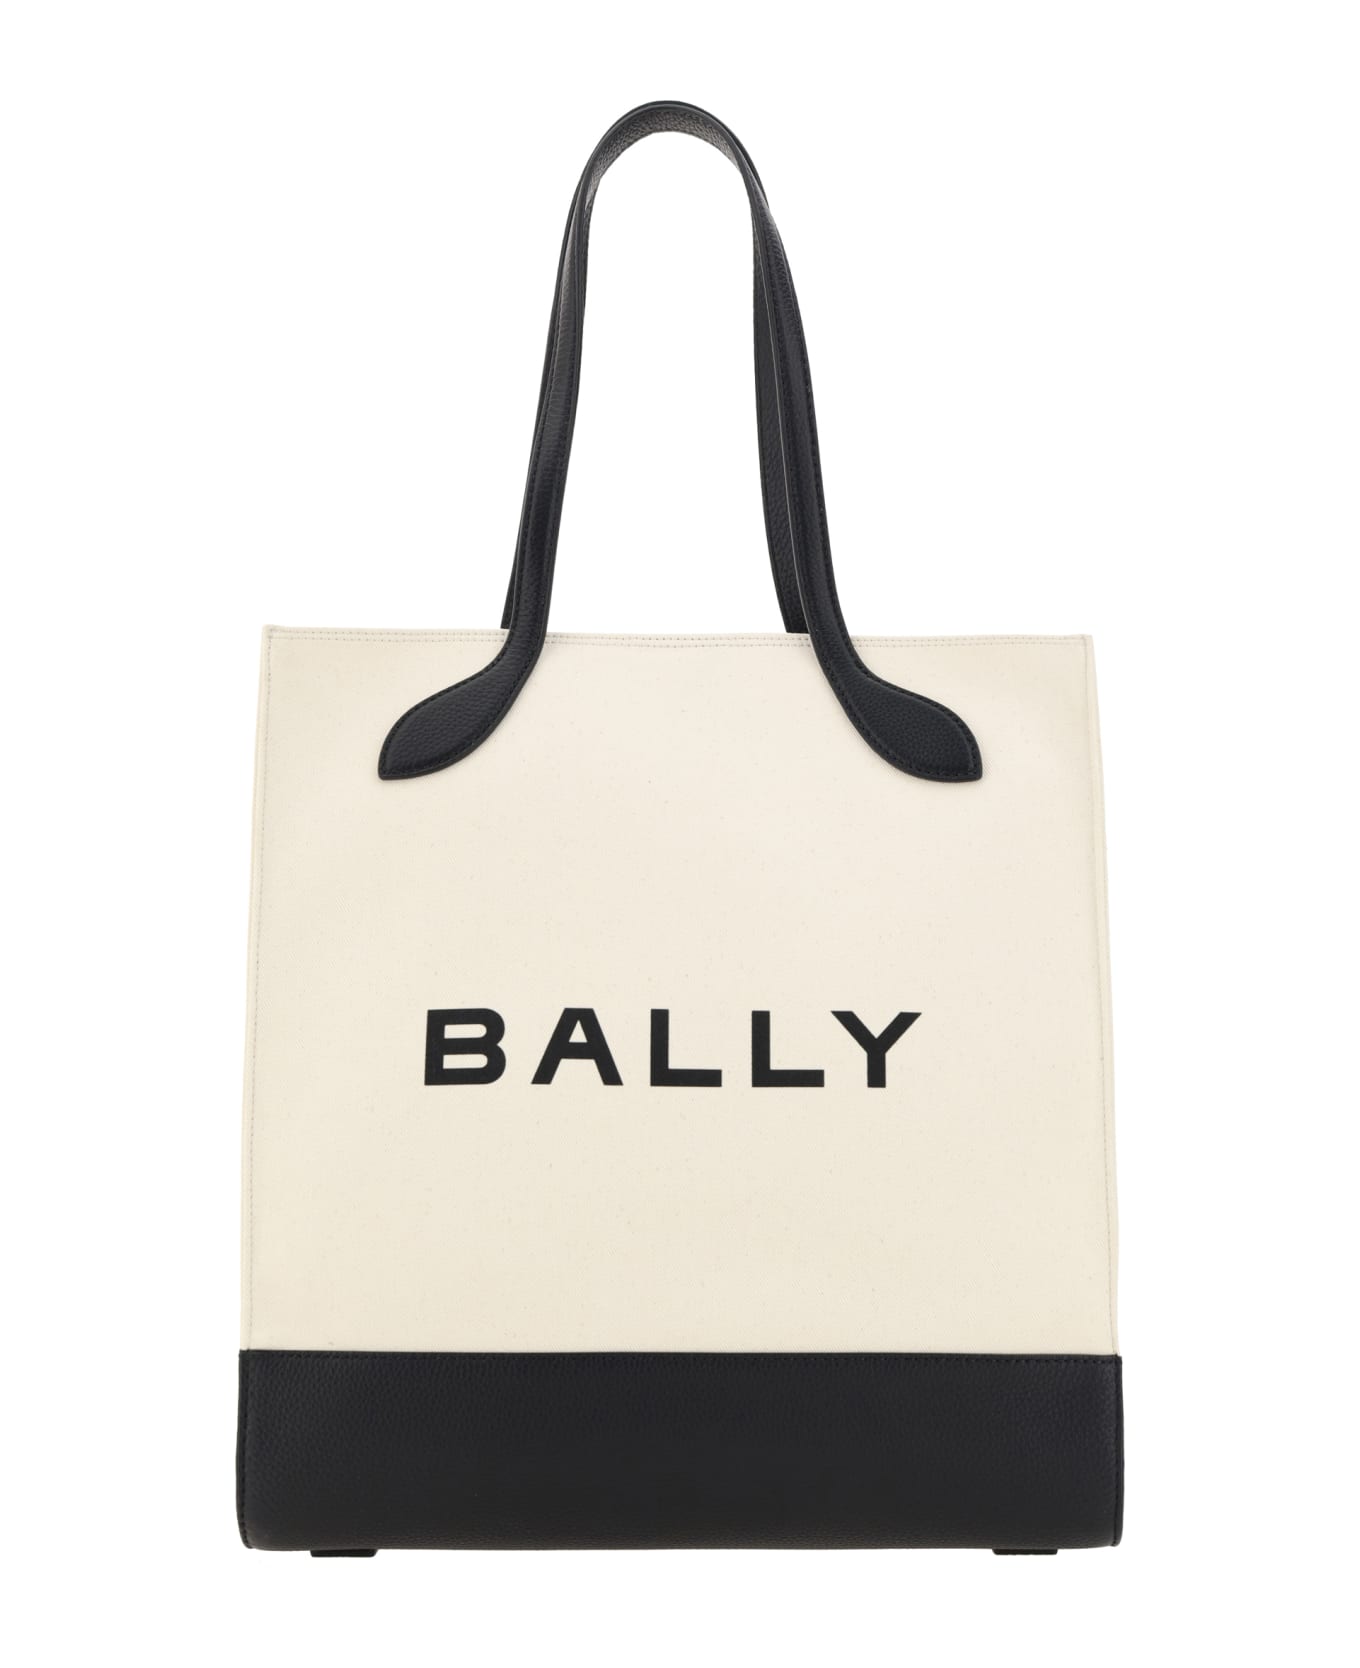 Bally Tote Shoulder Bag - Natural